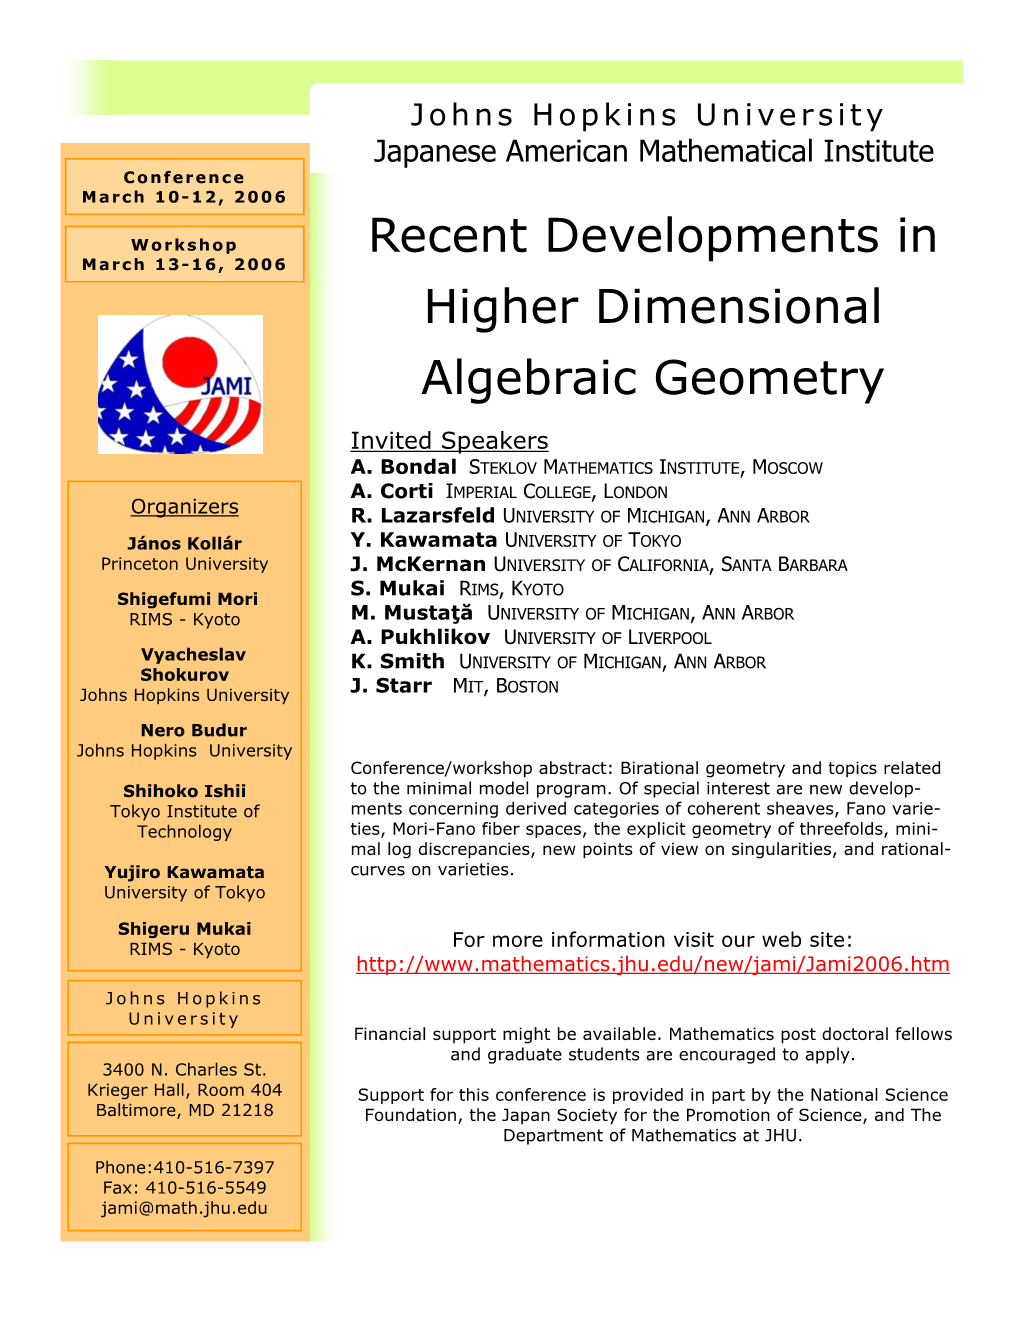 Recent Developments in Higher Dimensional Algebraic Geometry